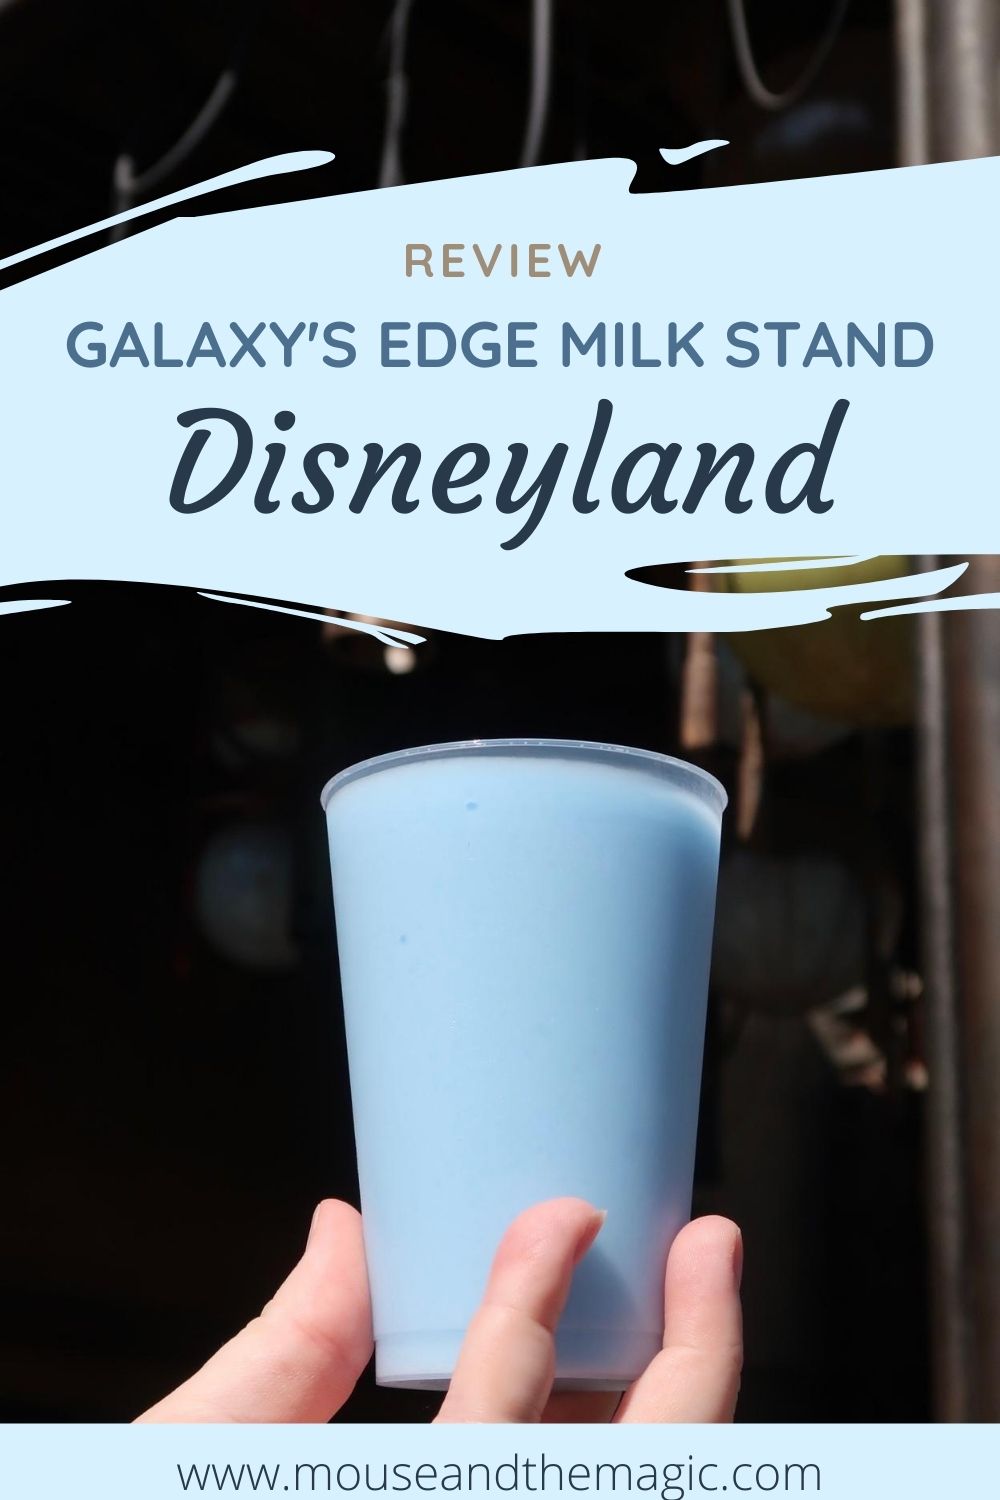 Galaxy's Edge Milk Stand at Disneyland